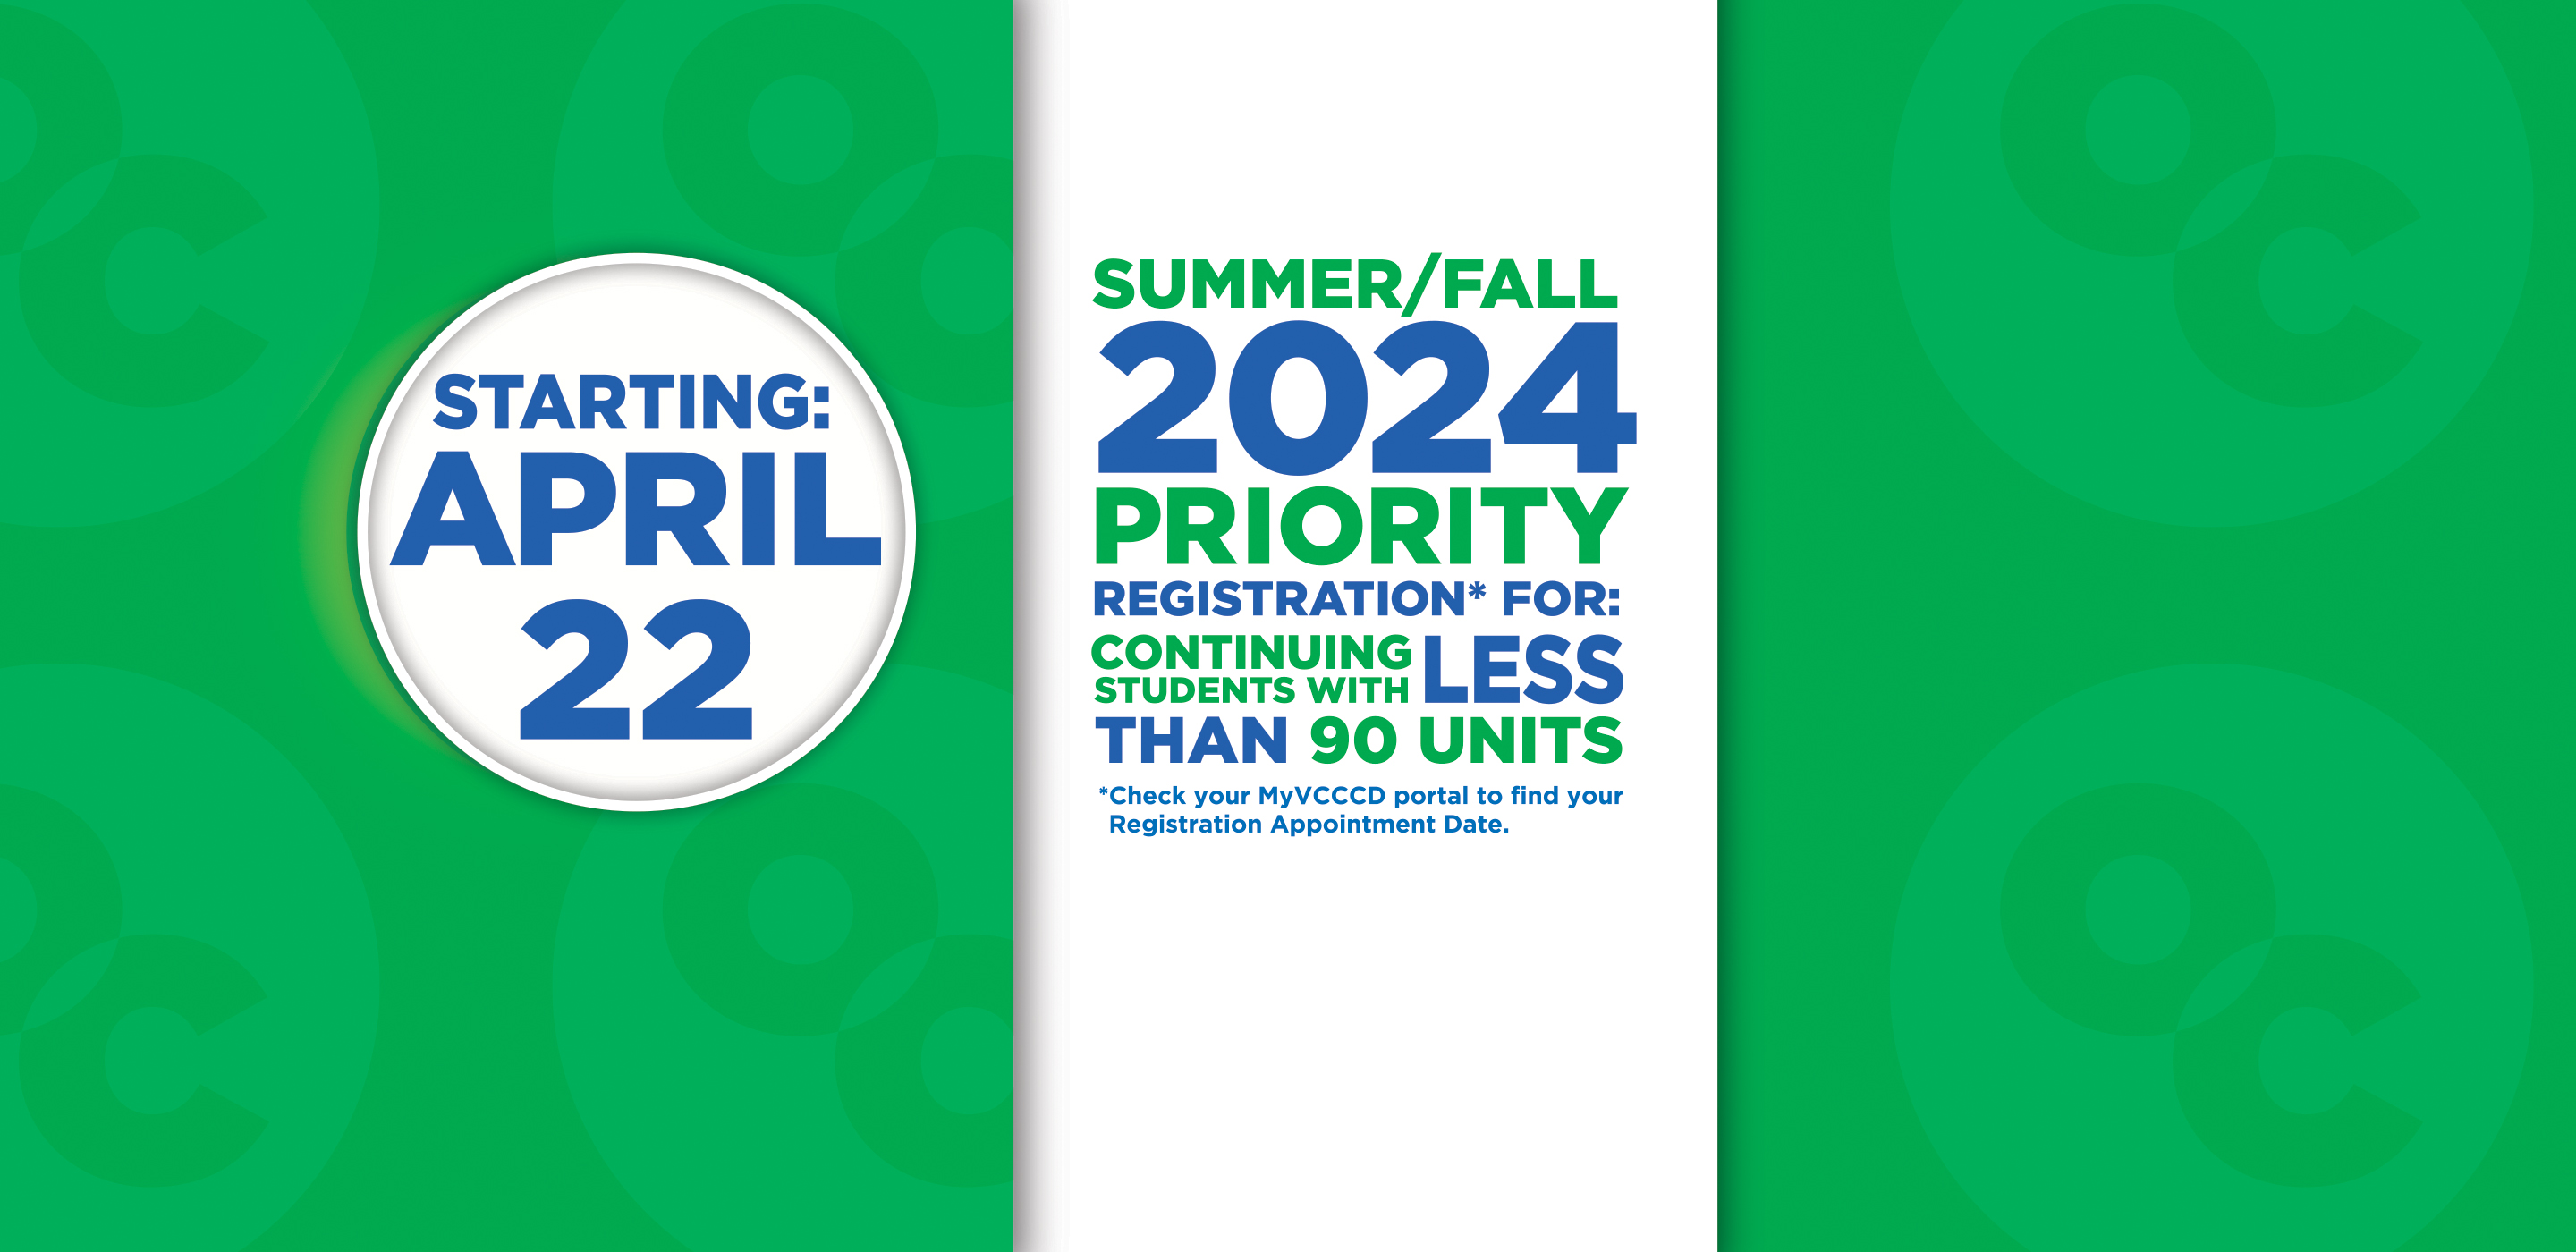 April 22: Summer/Fall 2024 Priority Registration Begins